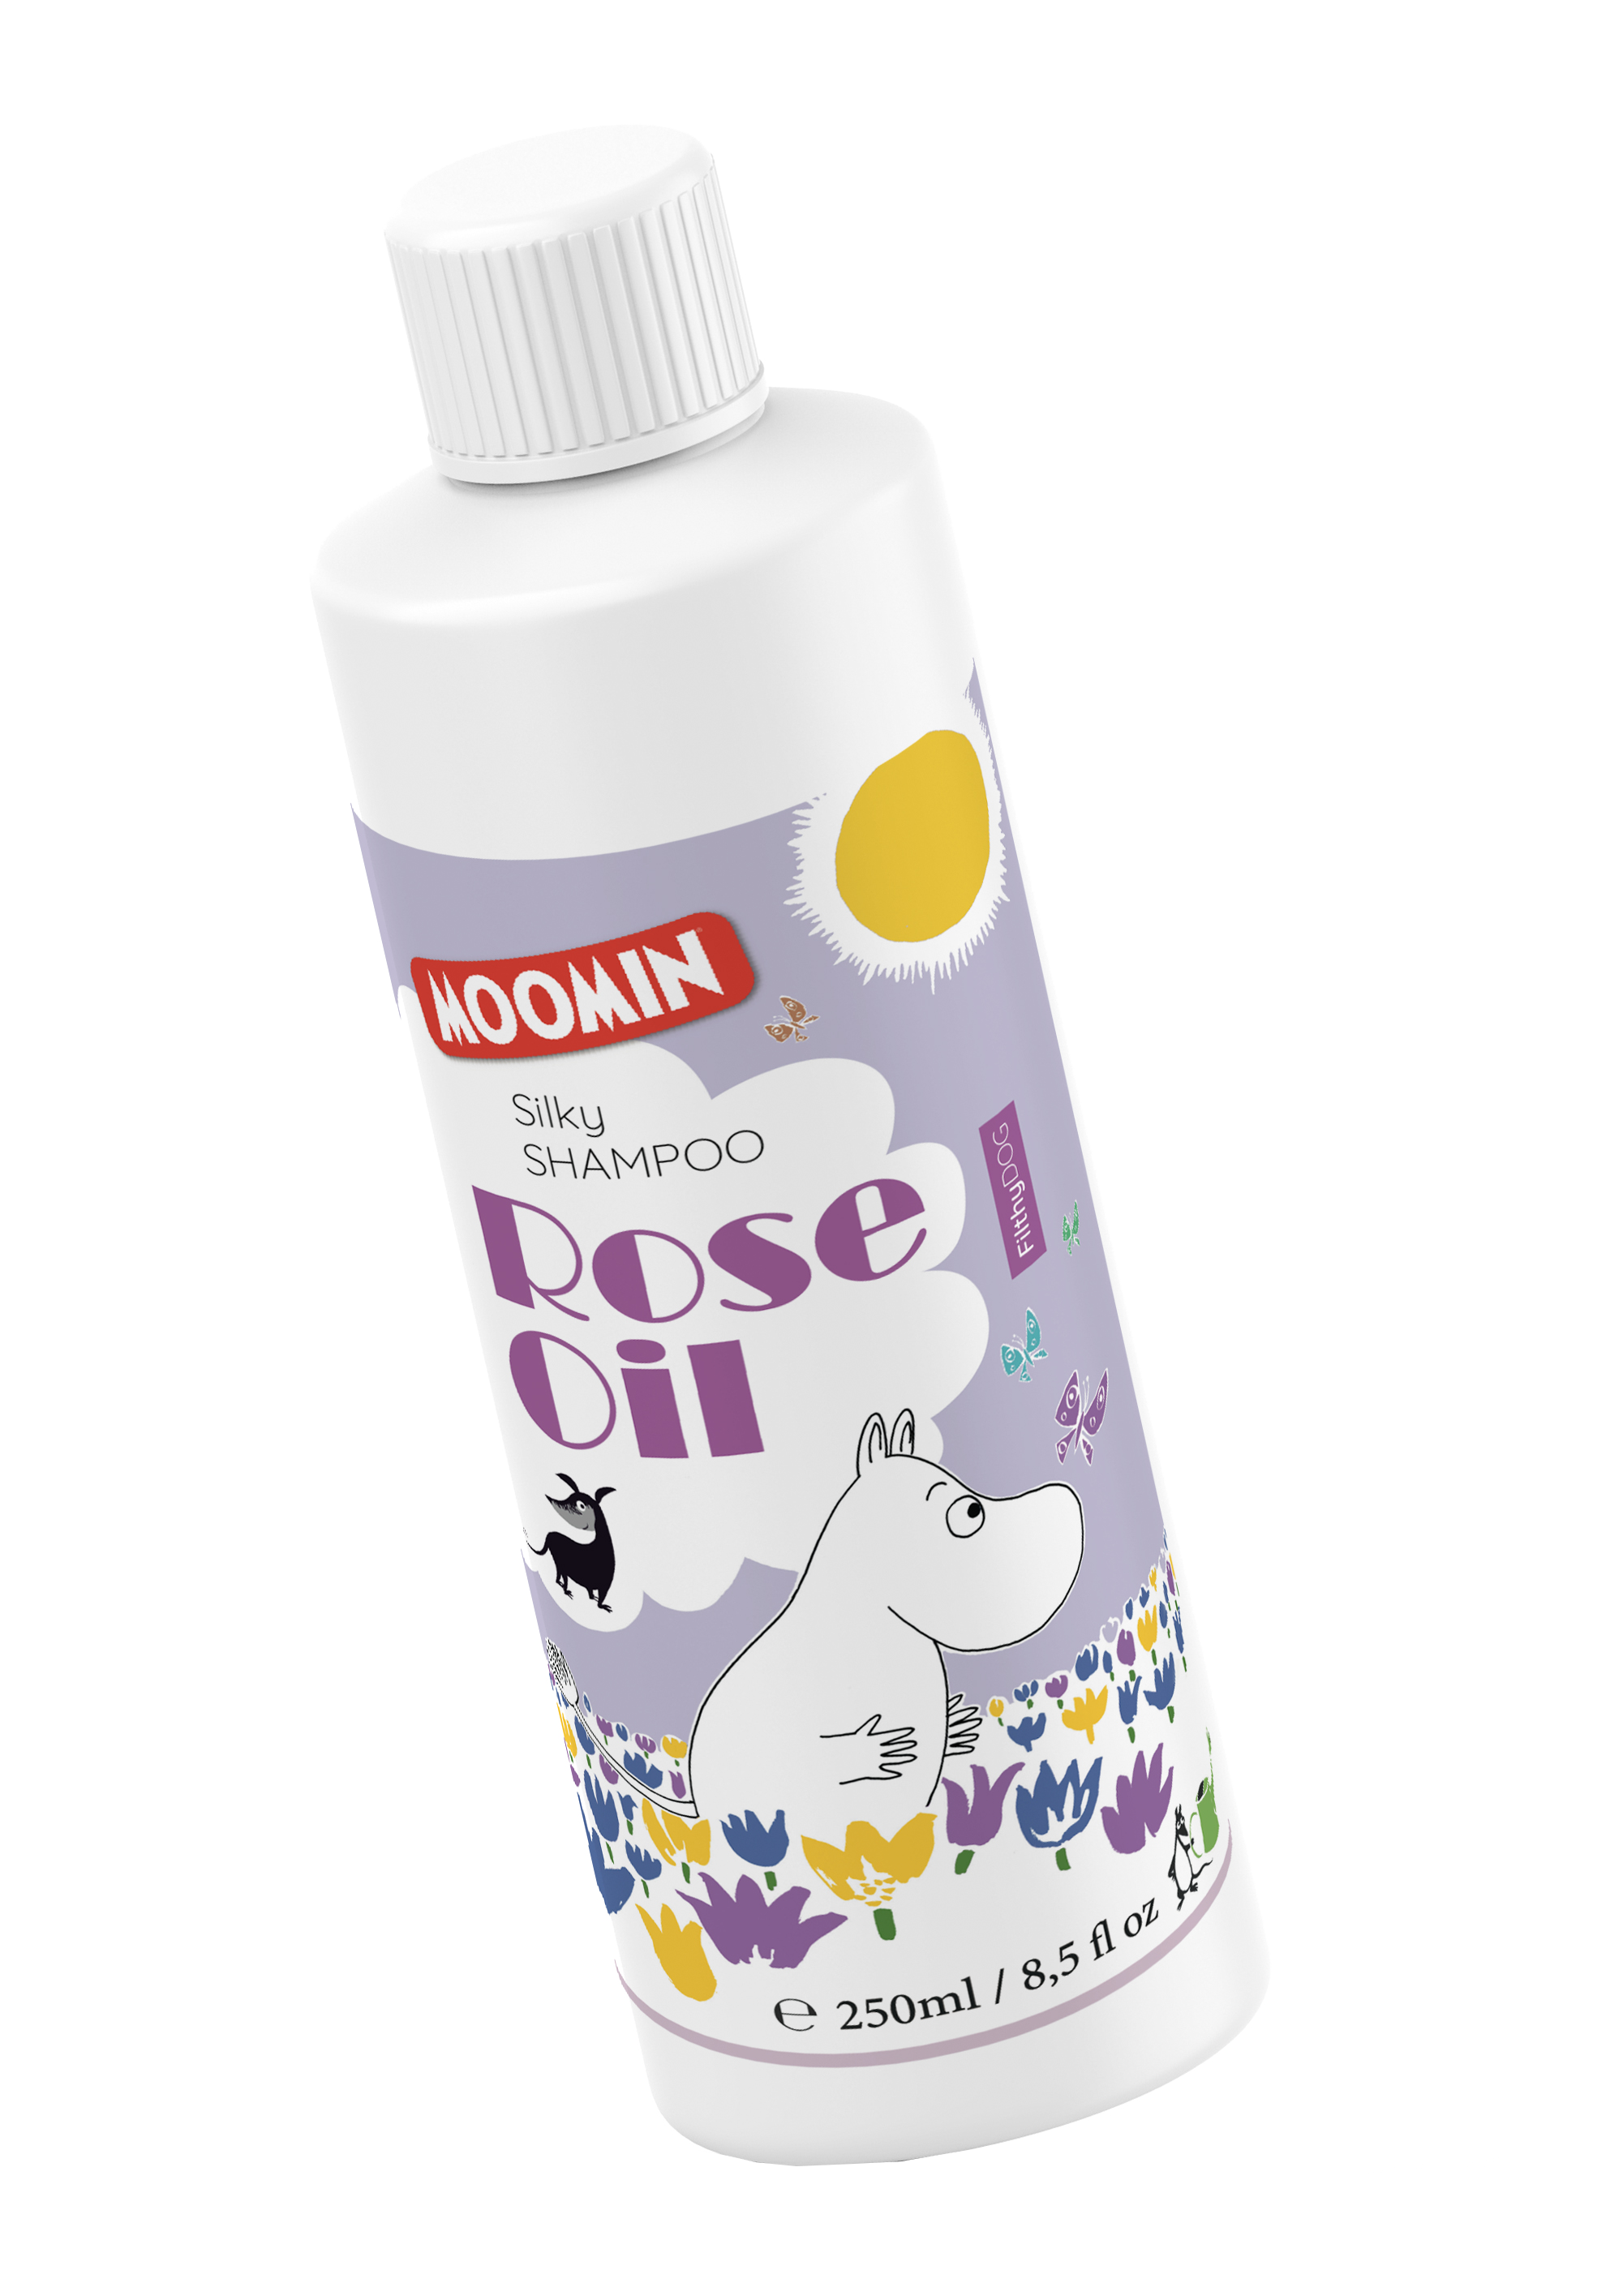 Moomins Rose Oil Shampoo by SohoPoms - 250ml